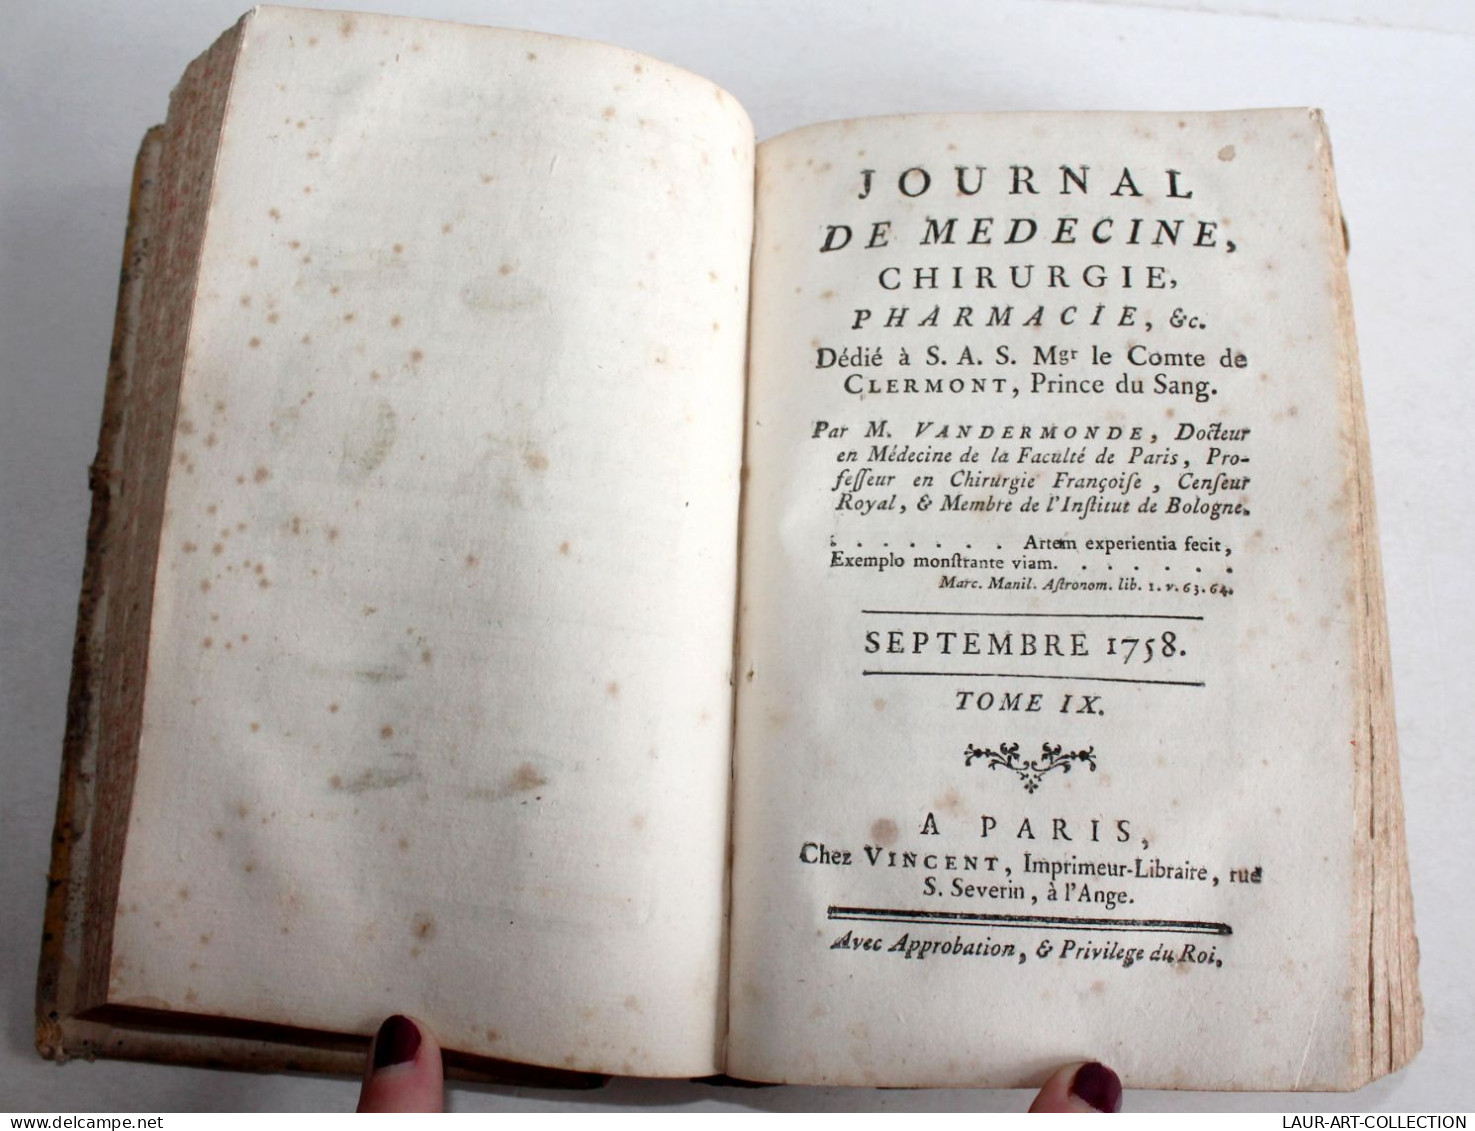 JOURNAL DE MEDECINE CHIRURGIE PHARMACIE Par VANDERMONDE JUIL. A DEC 1758 TOME IX / ANCIEN LIVRE XVIIIe SIECLE (2603.90) - Health